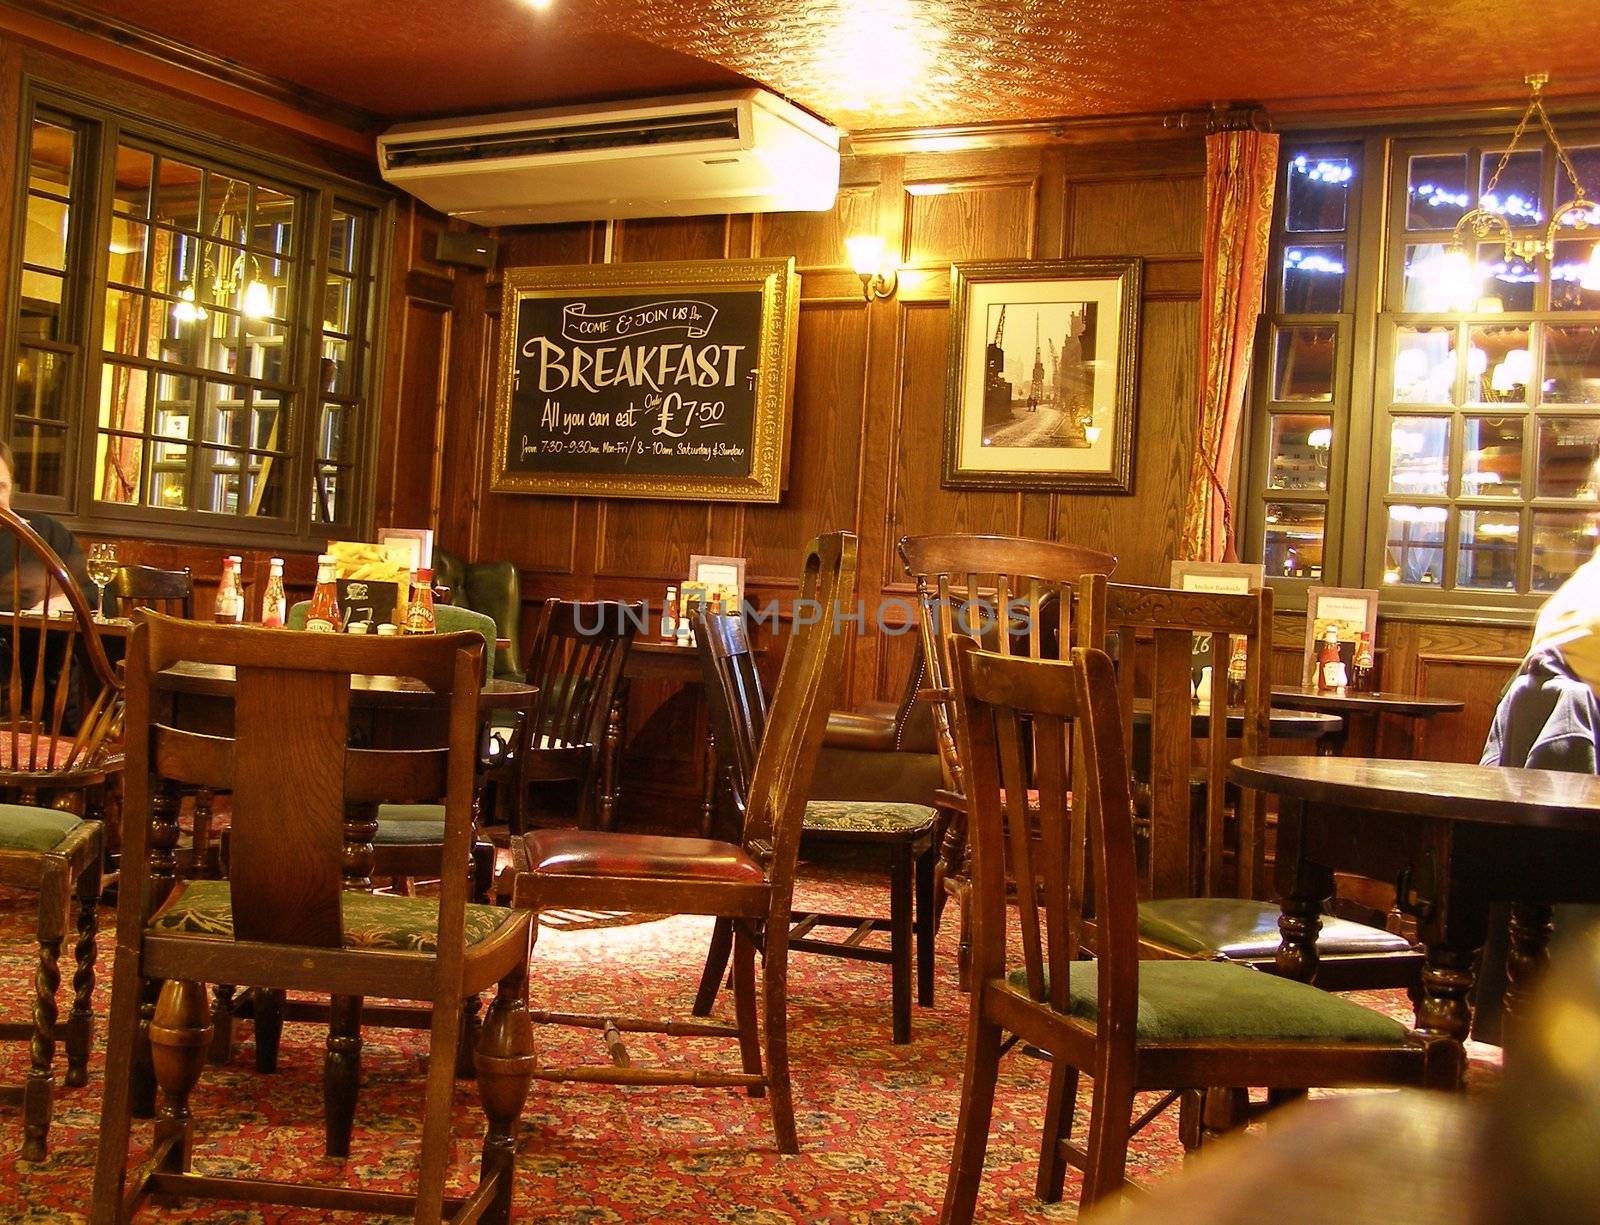 interiors of a traditional British or Irish pub